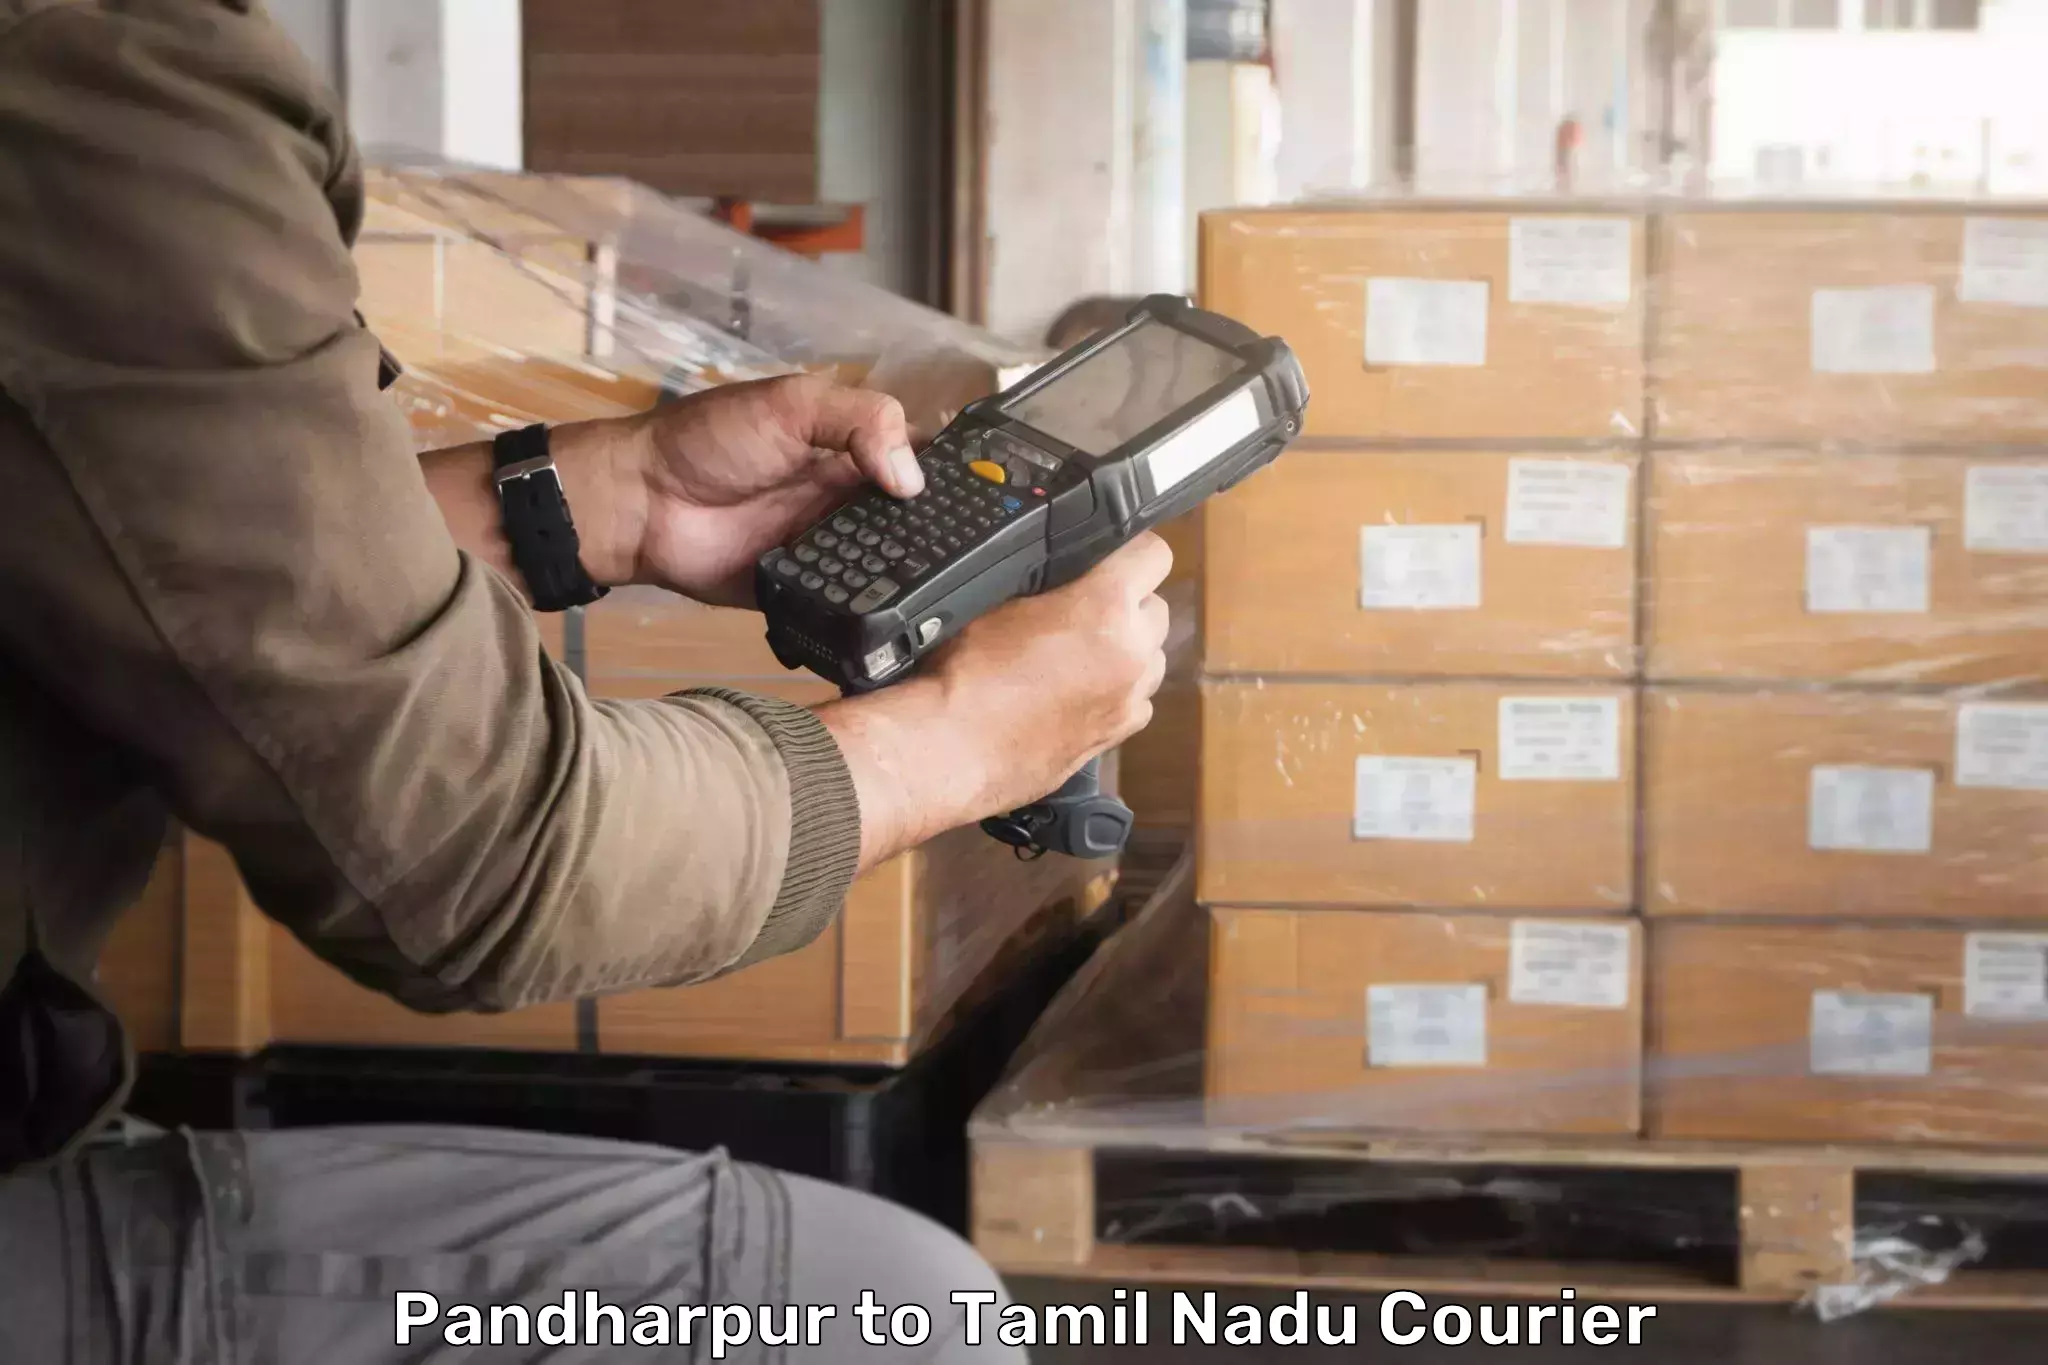 Courier app Pandharpur to Anthiyur